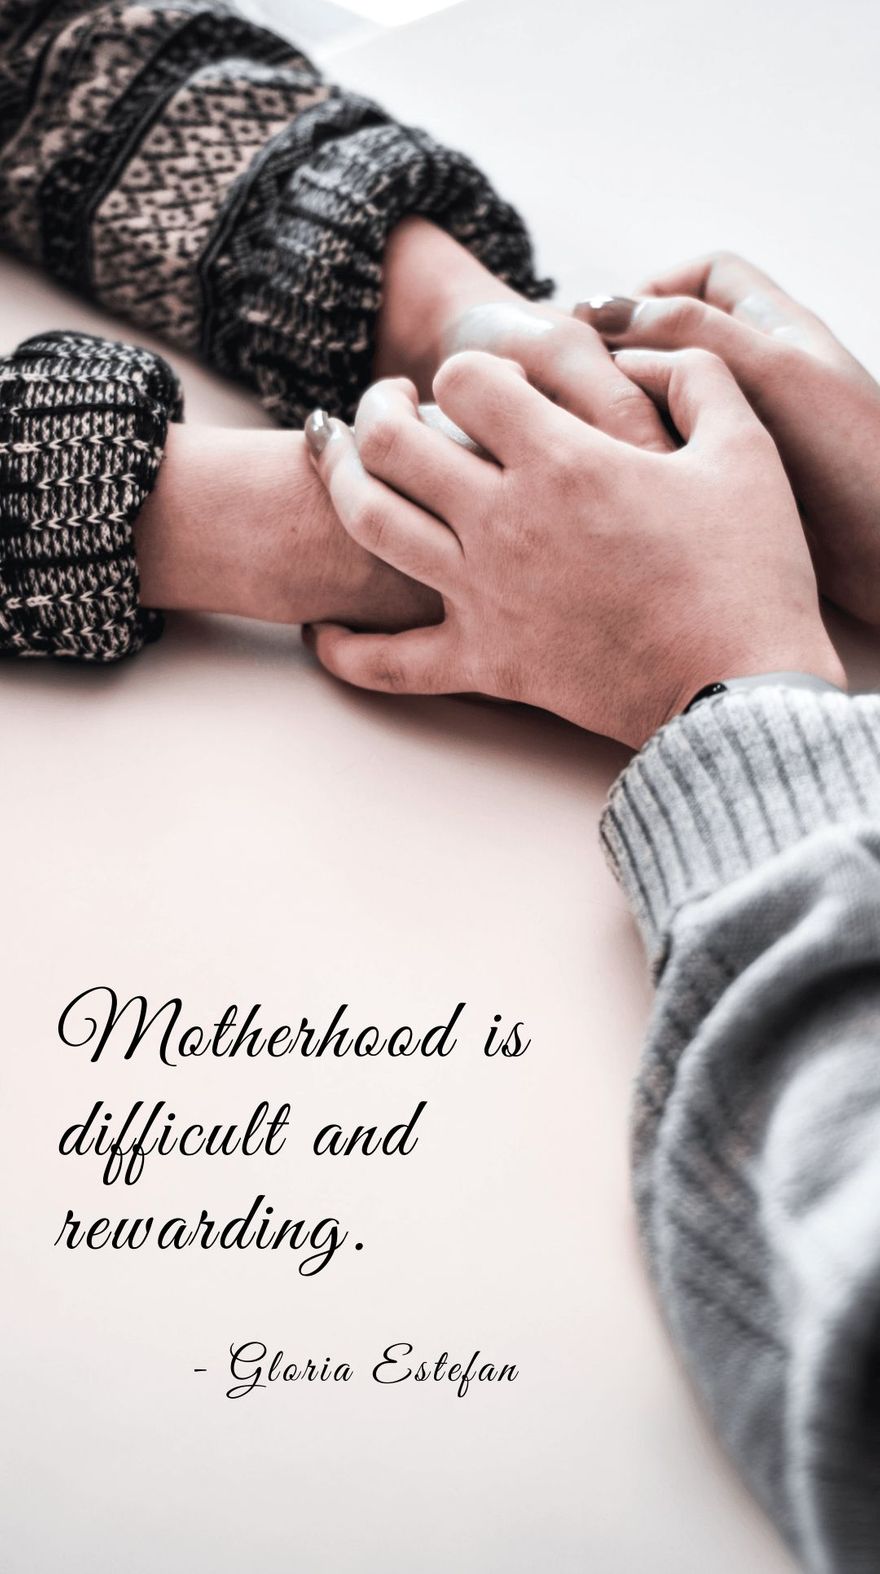 Gloria Estefan - Motherhood is... difficult and... rewarding. in JPG